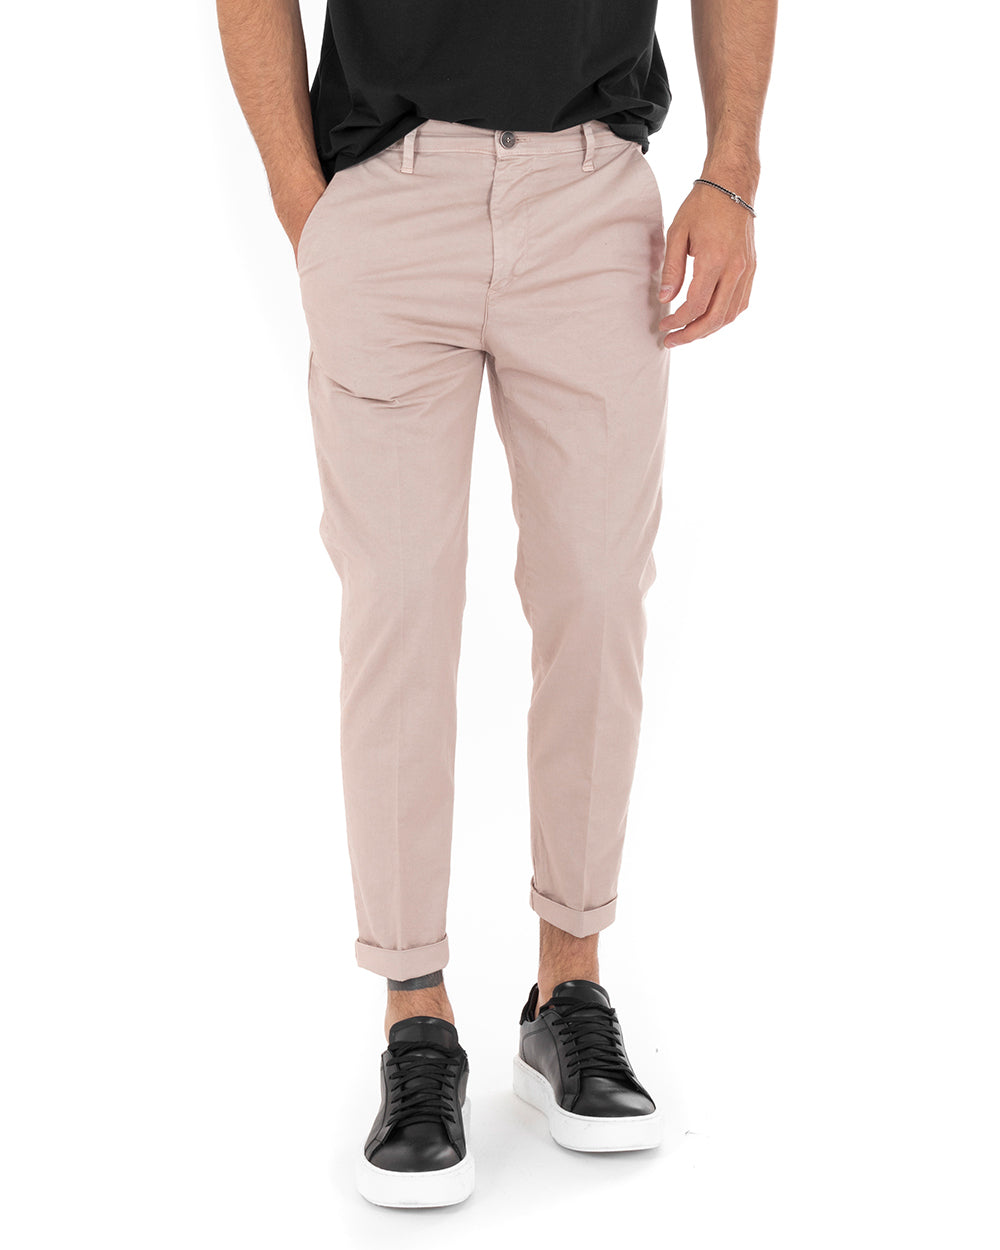 Pantaloni Uomo Cotone Tasca America Chinos Capri Sartoriale Slim Fit Casual Rosa GIOSAL-P6102A